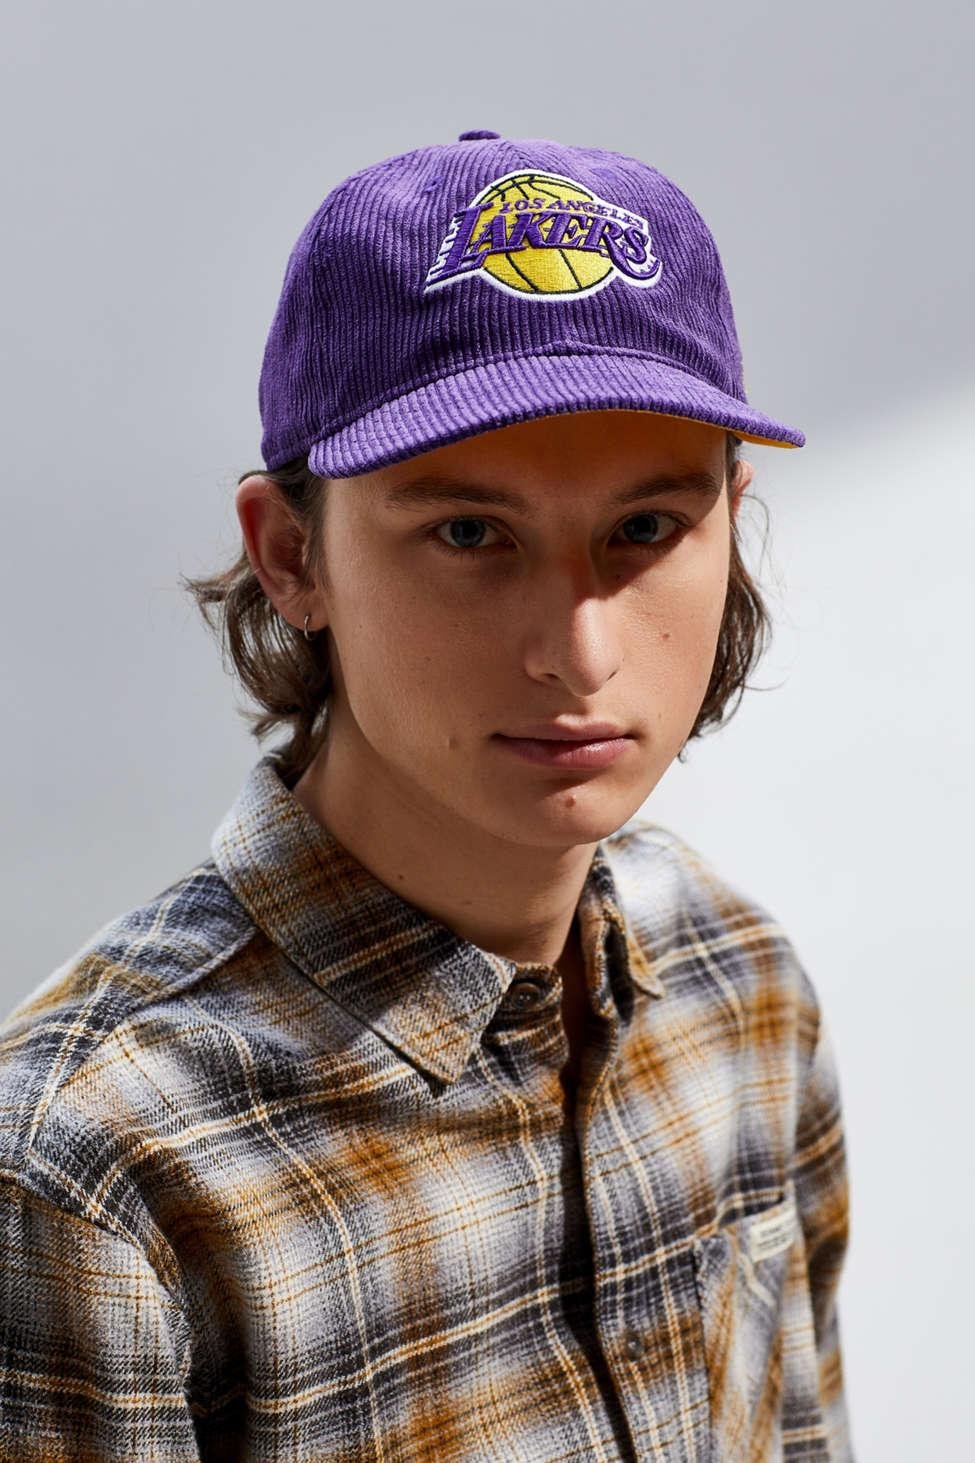 purple lakers cap